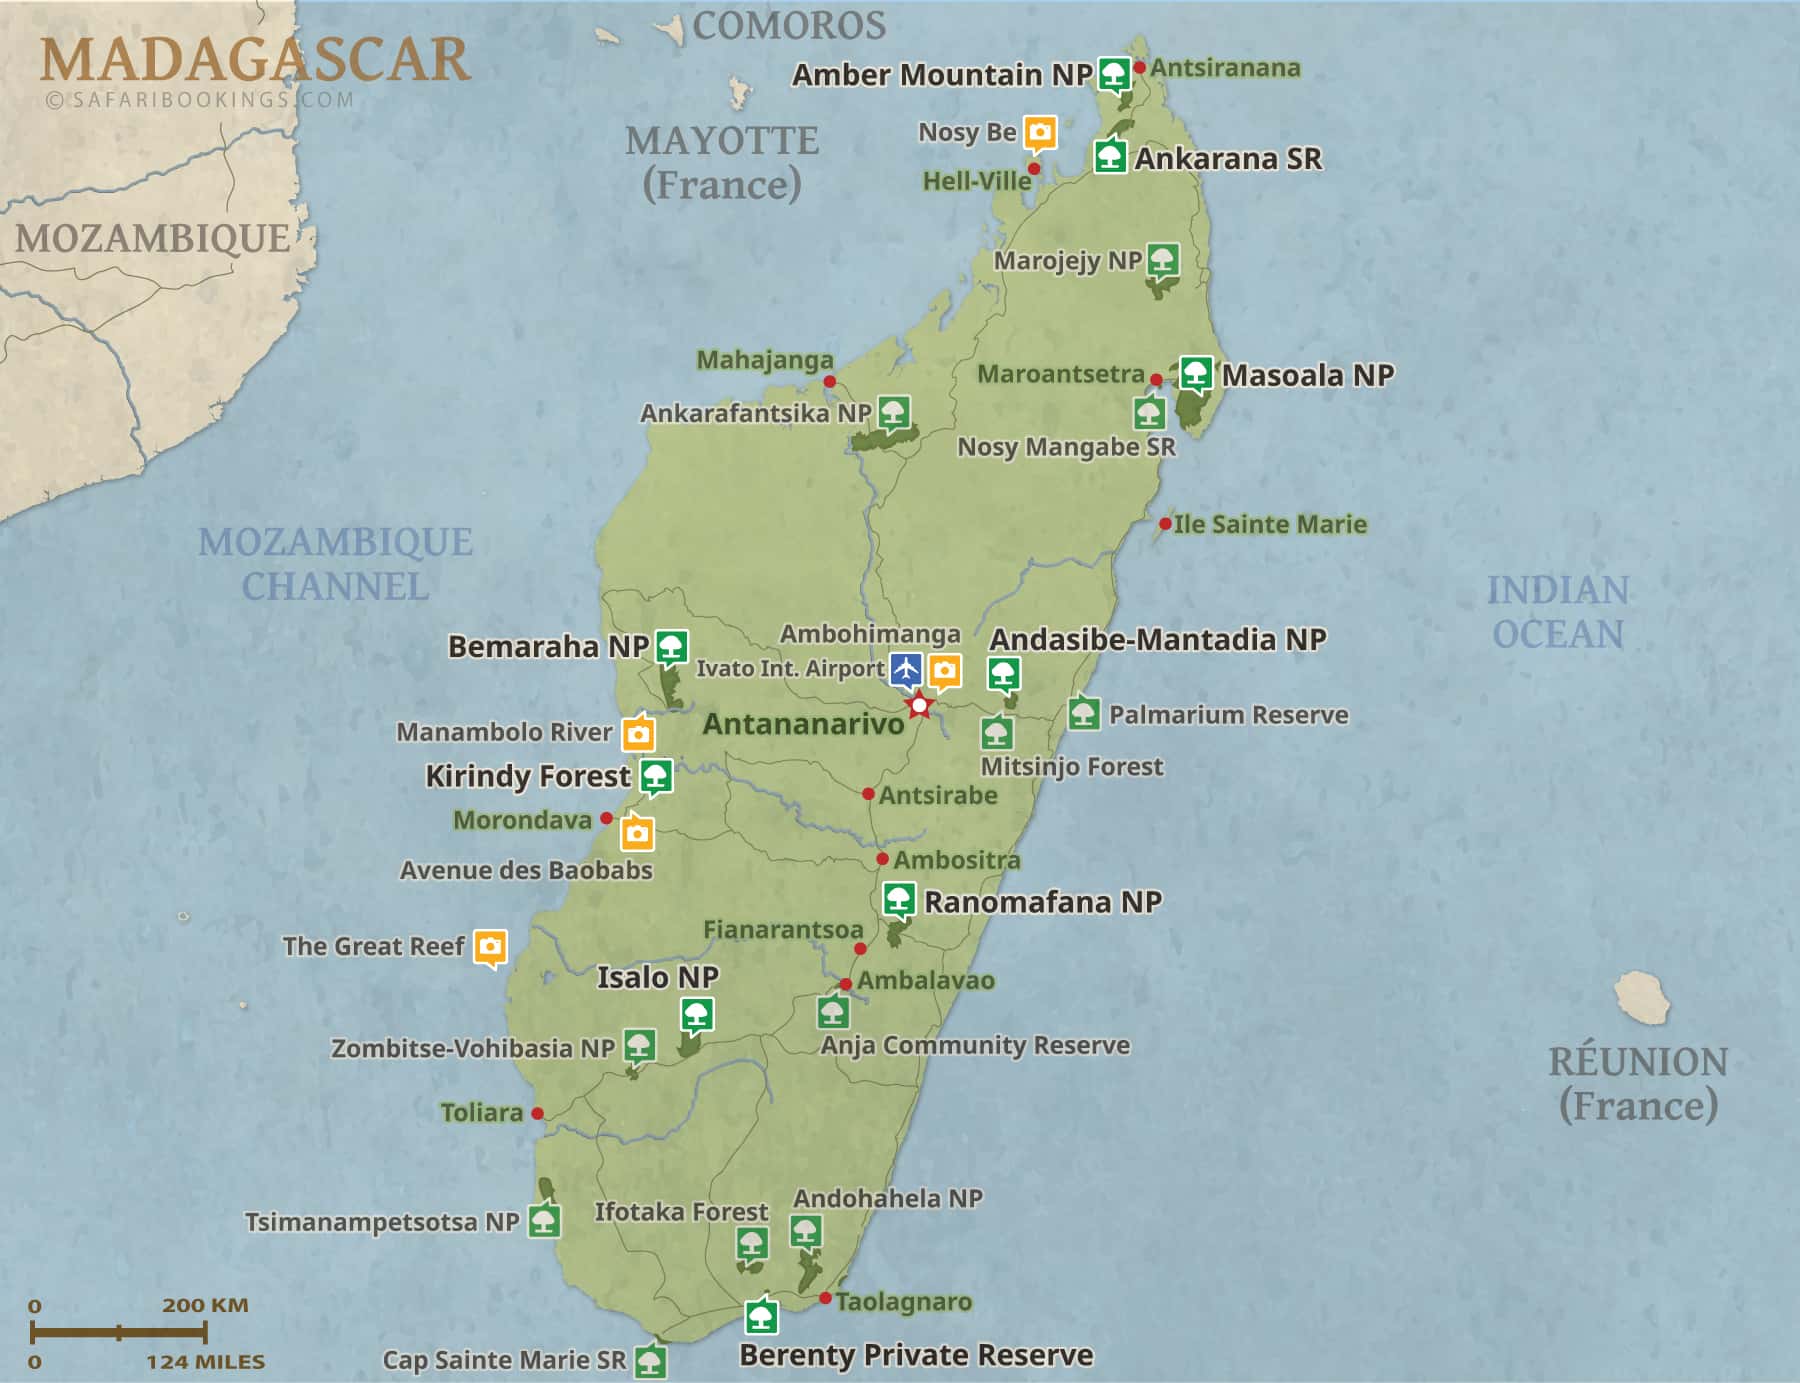 Detailed Map of Madagascar National Parks